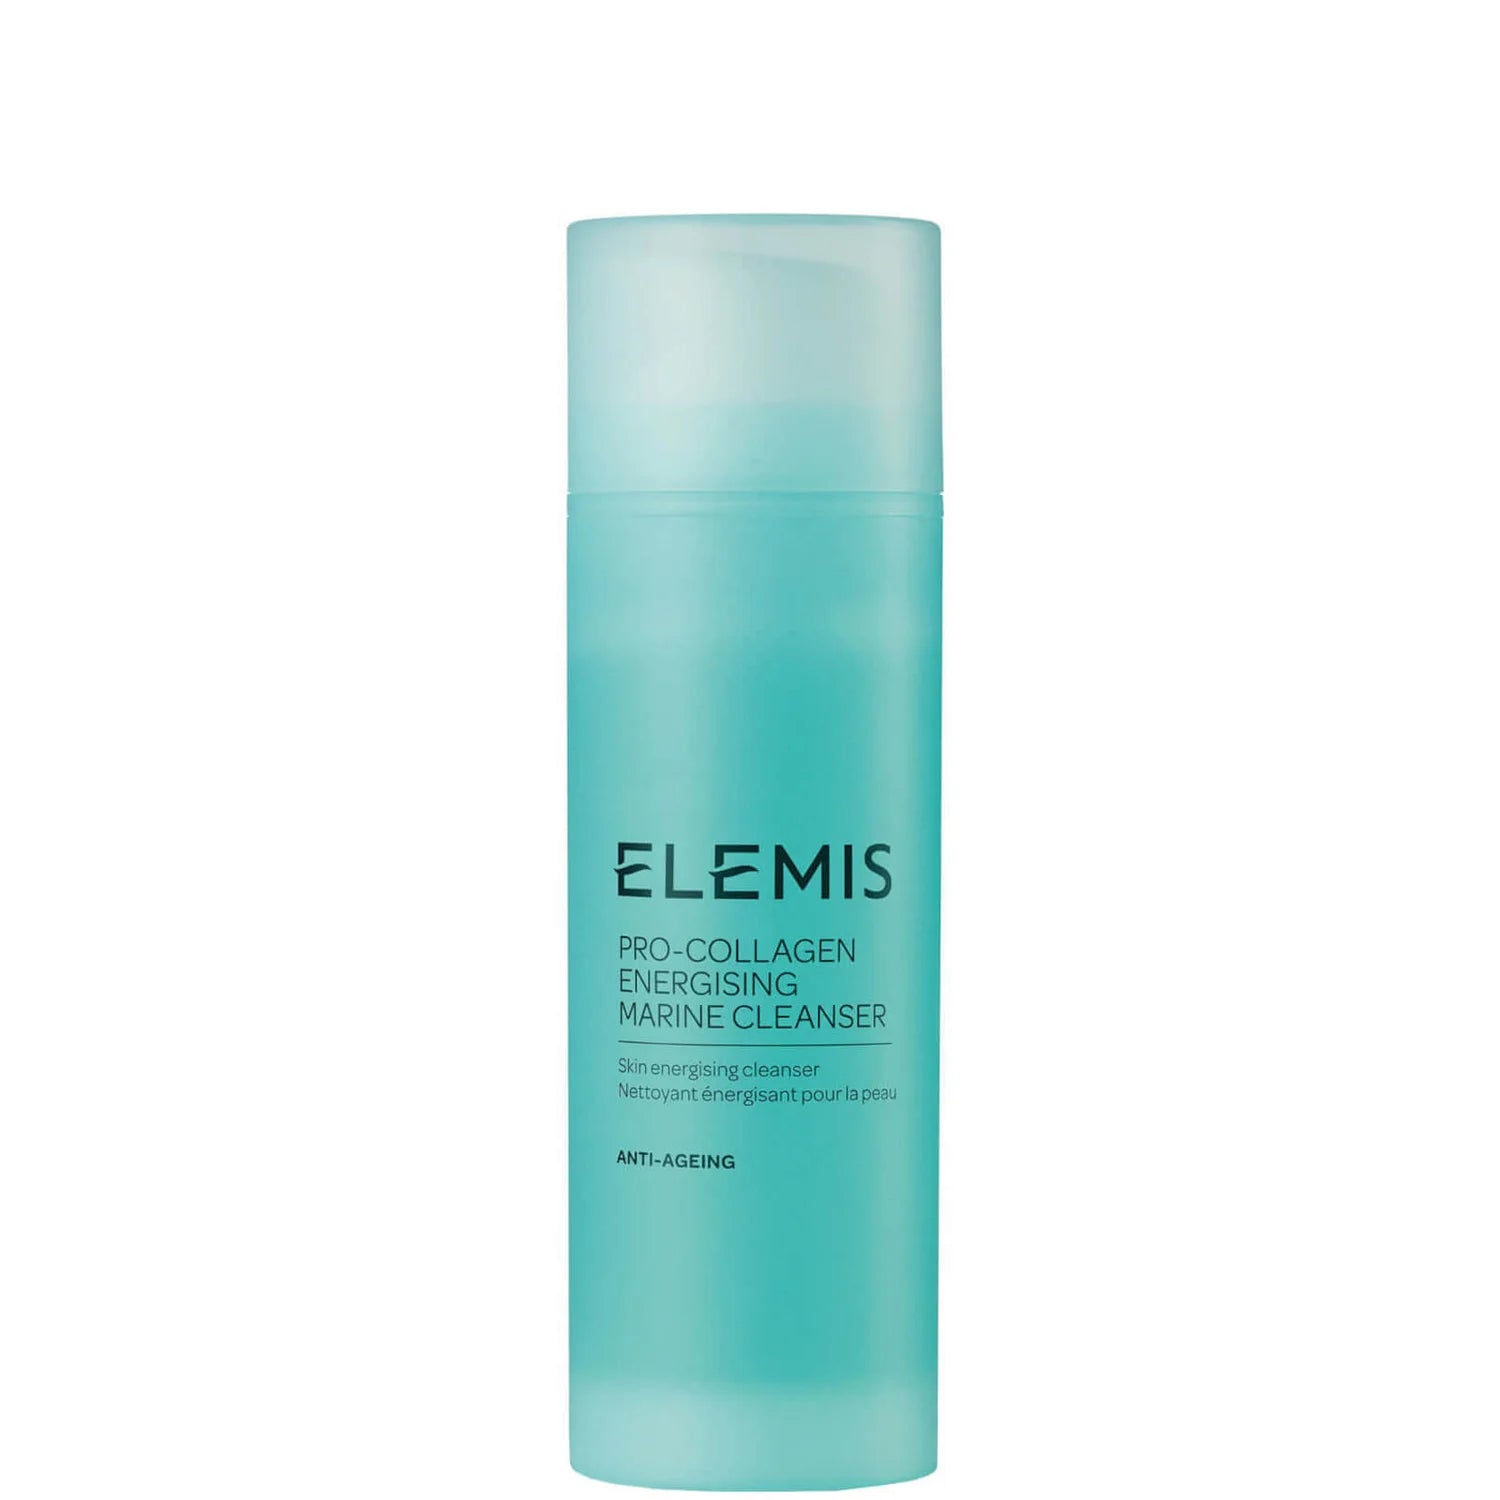 ELEMIS Pro-Collagen Energising Marine Cleanser product image. 